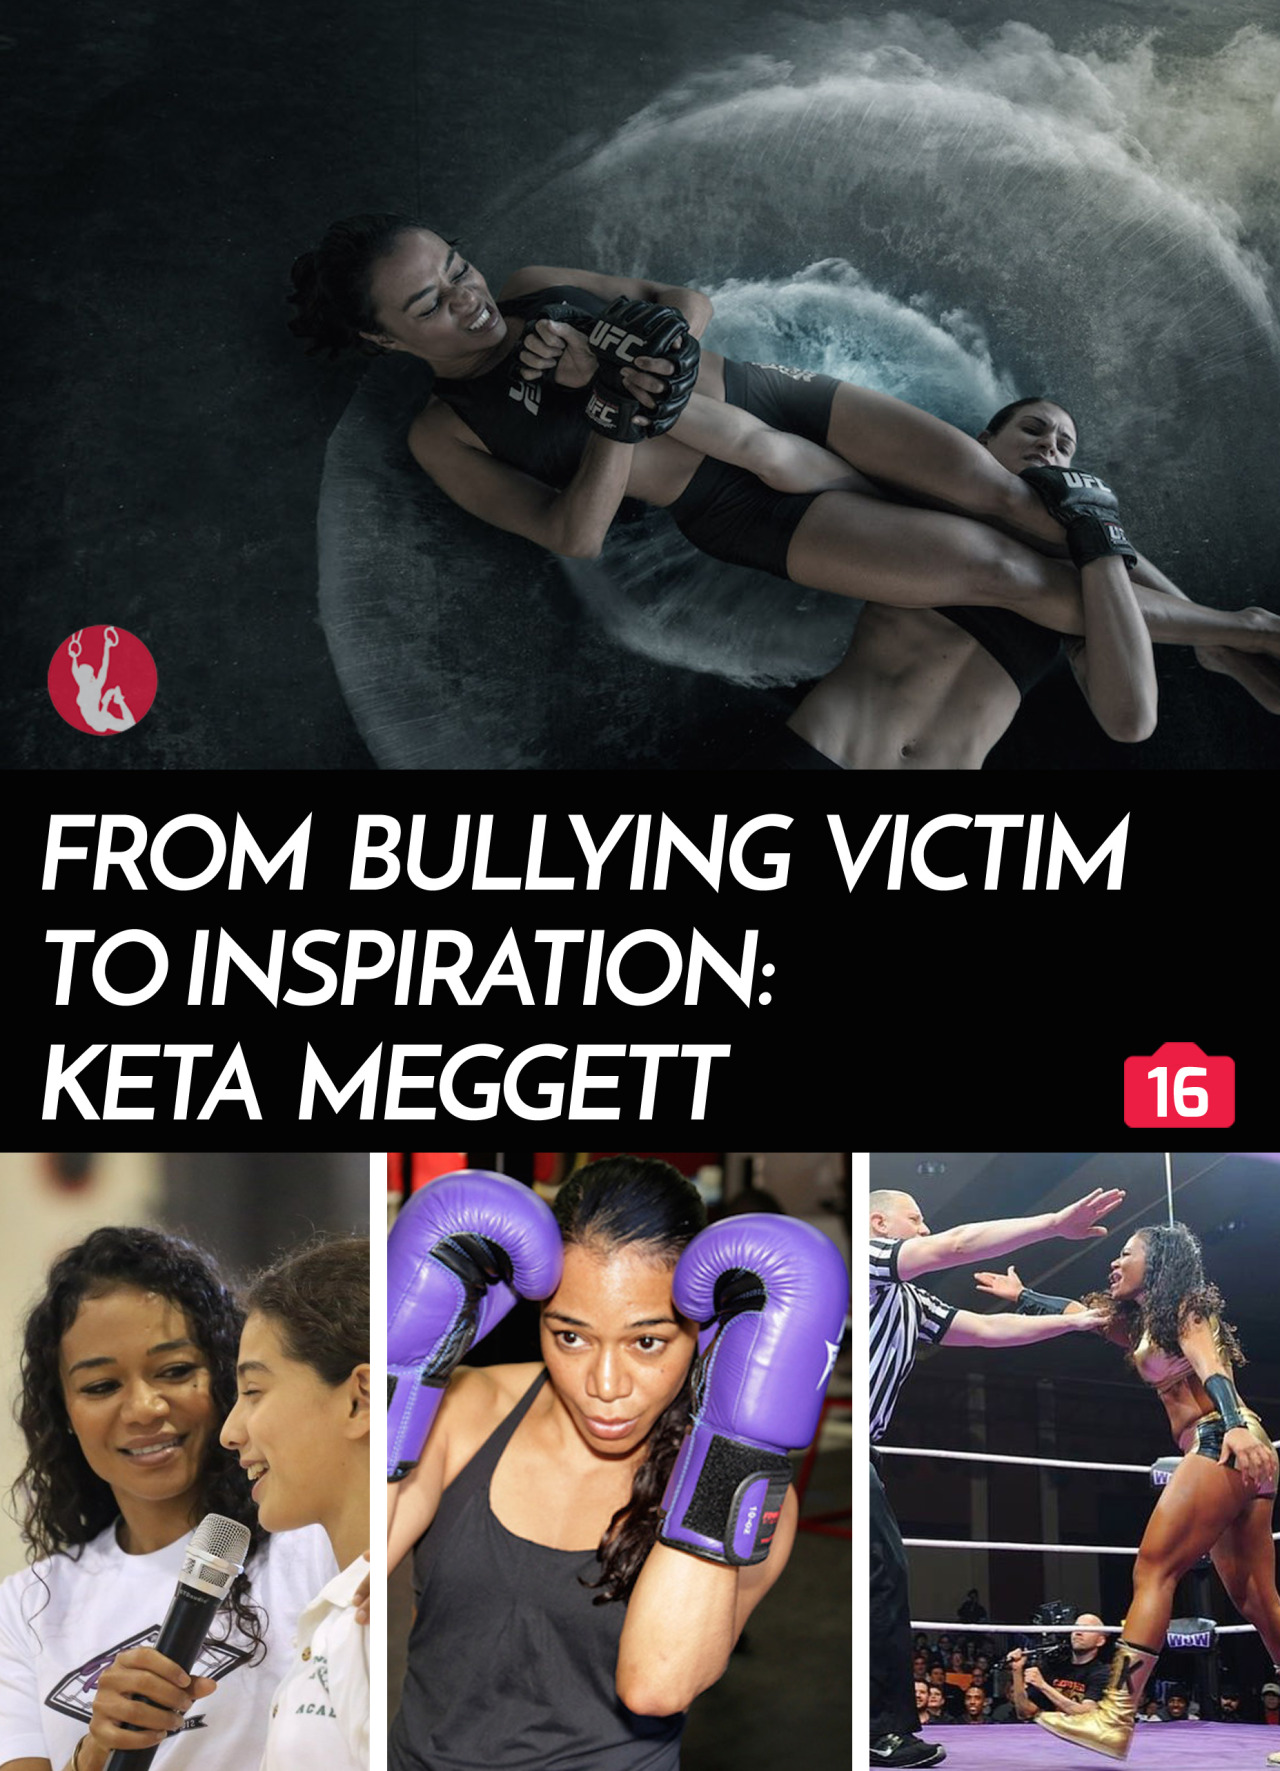 Girl Meets Strong — Meet Keta (key-ta) Meggett, her name means “pretty